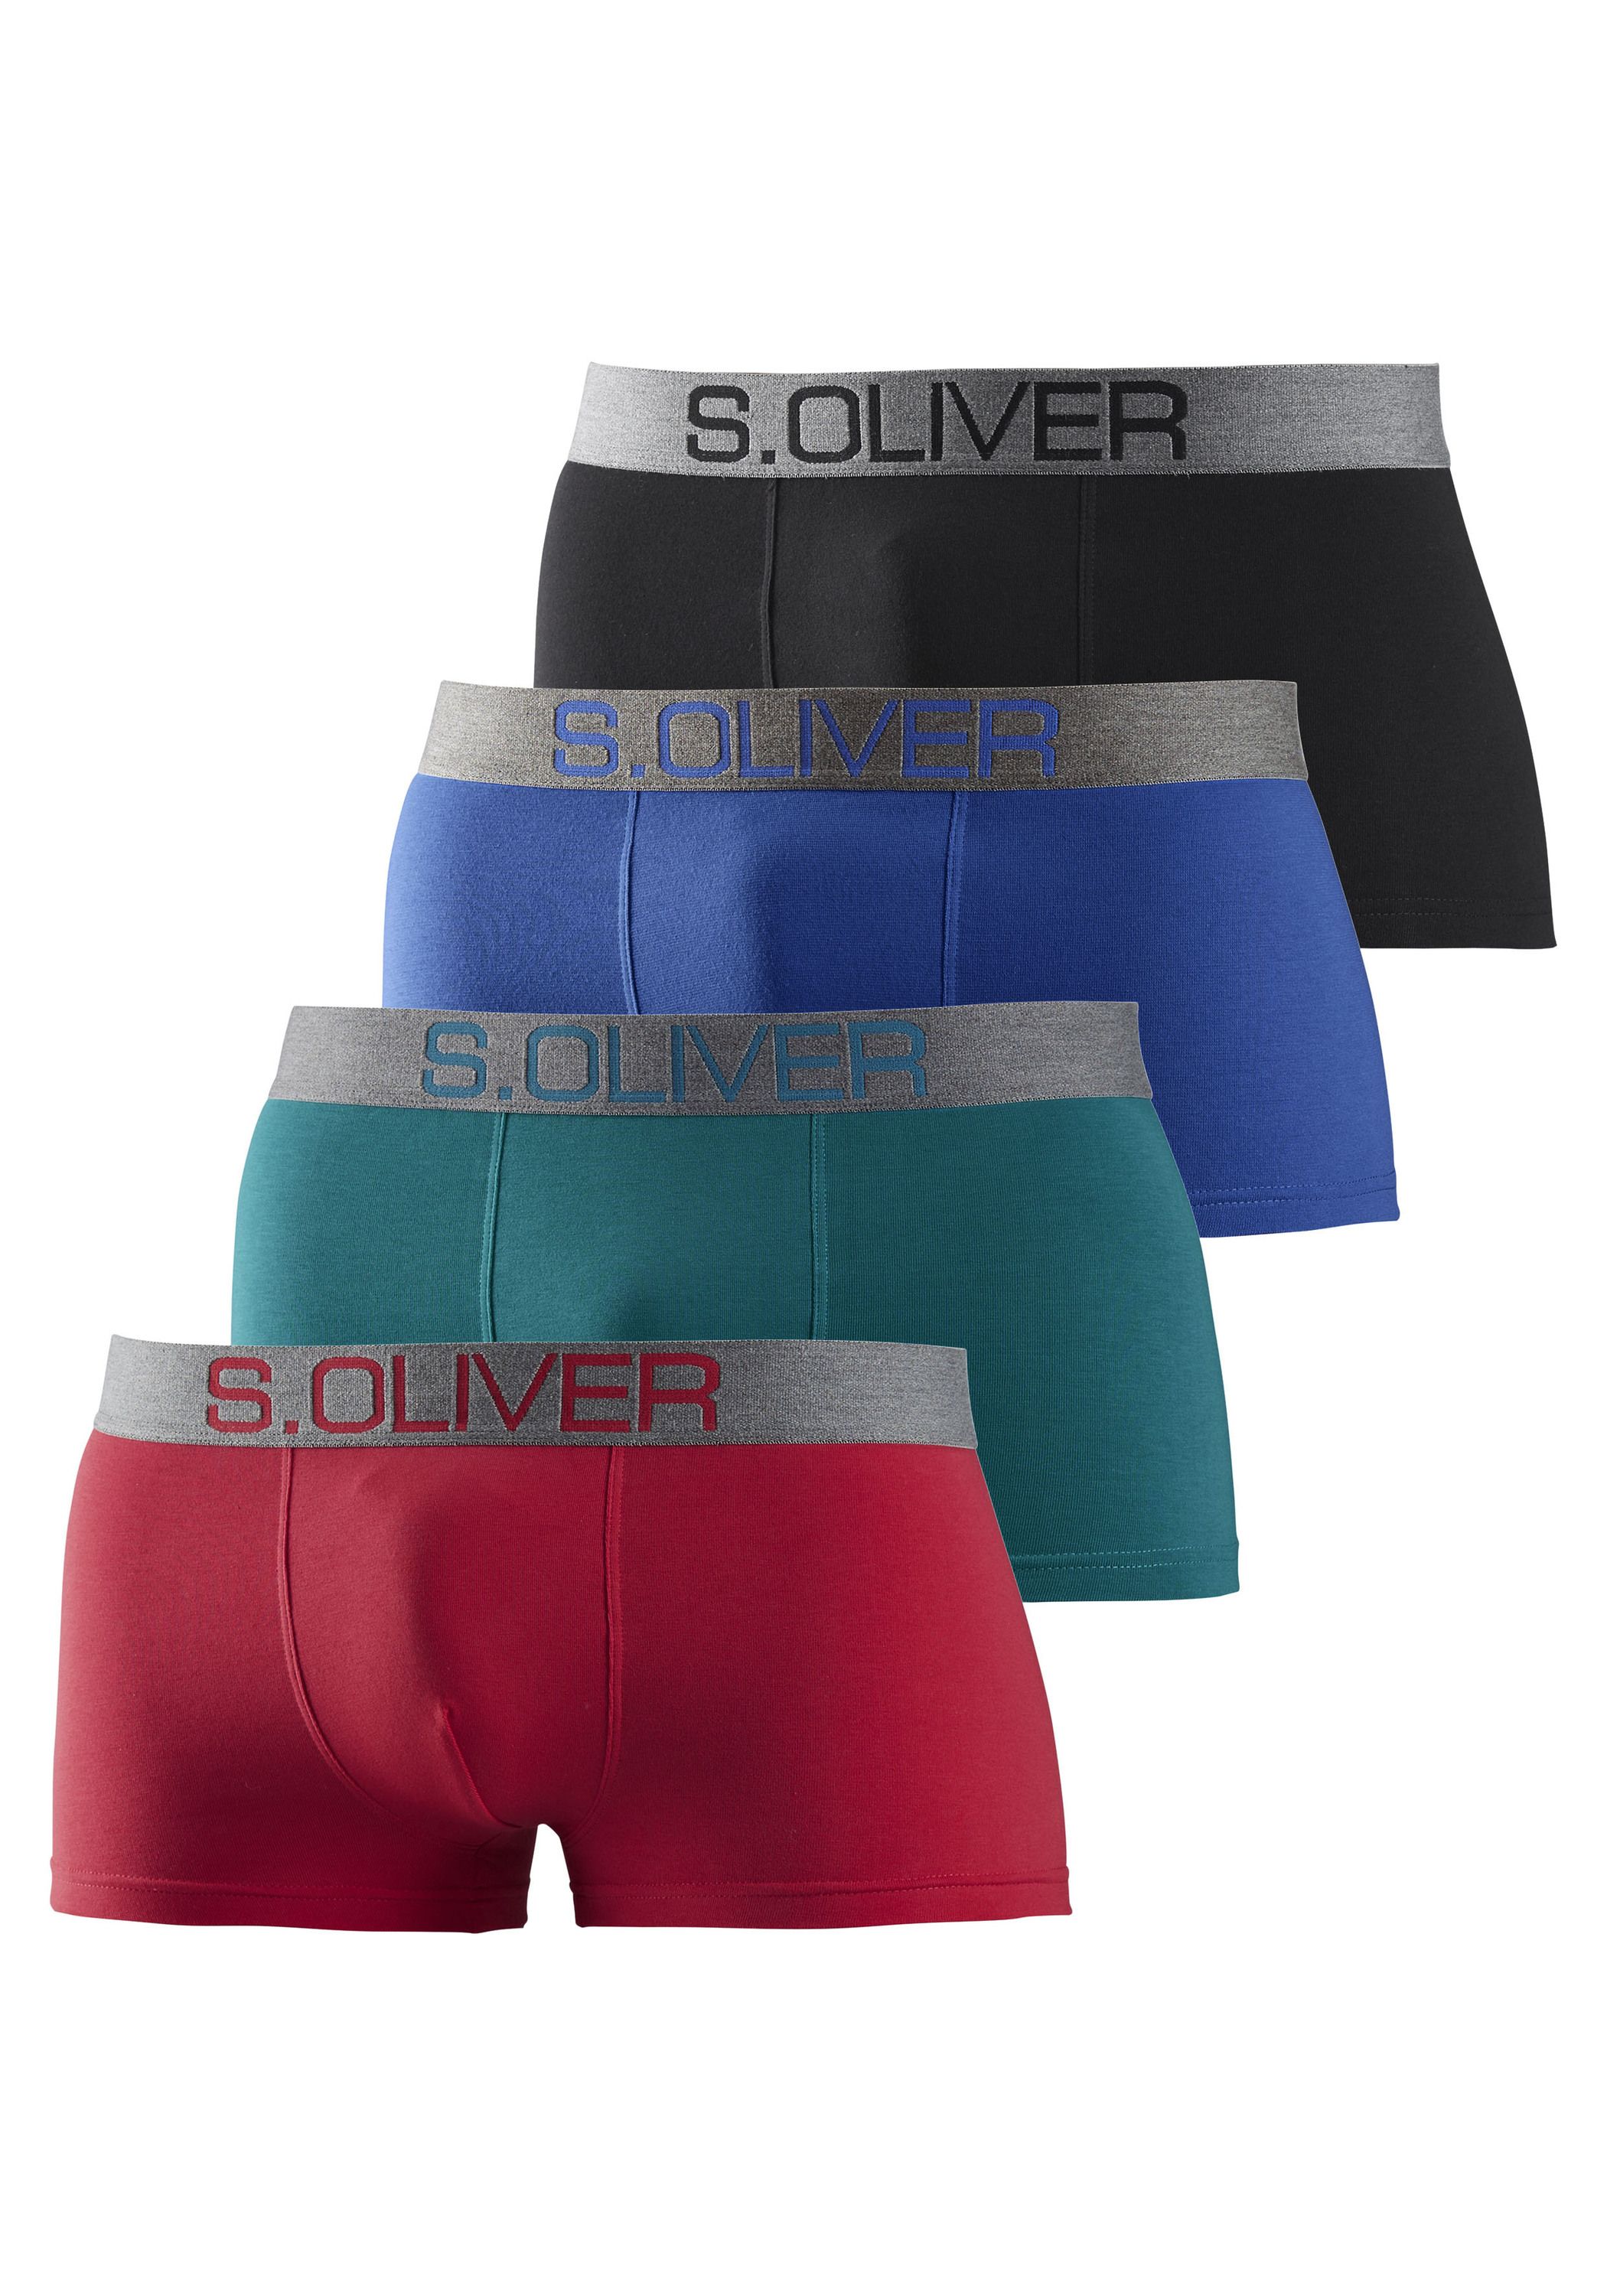 Боксеры S Oliver Boxershorts, цвет rot, petrol, blau, schwarz